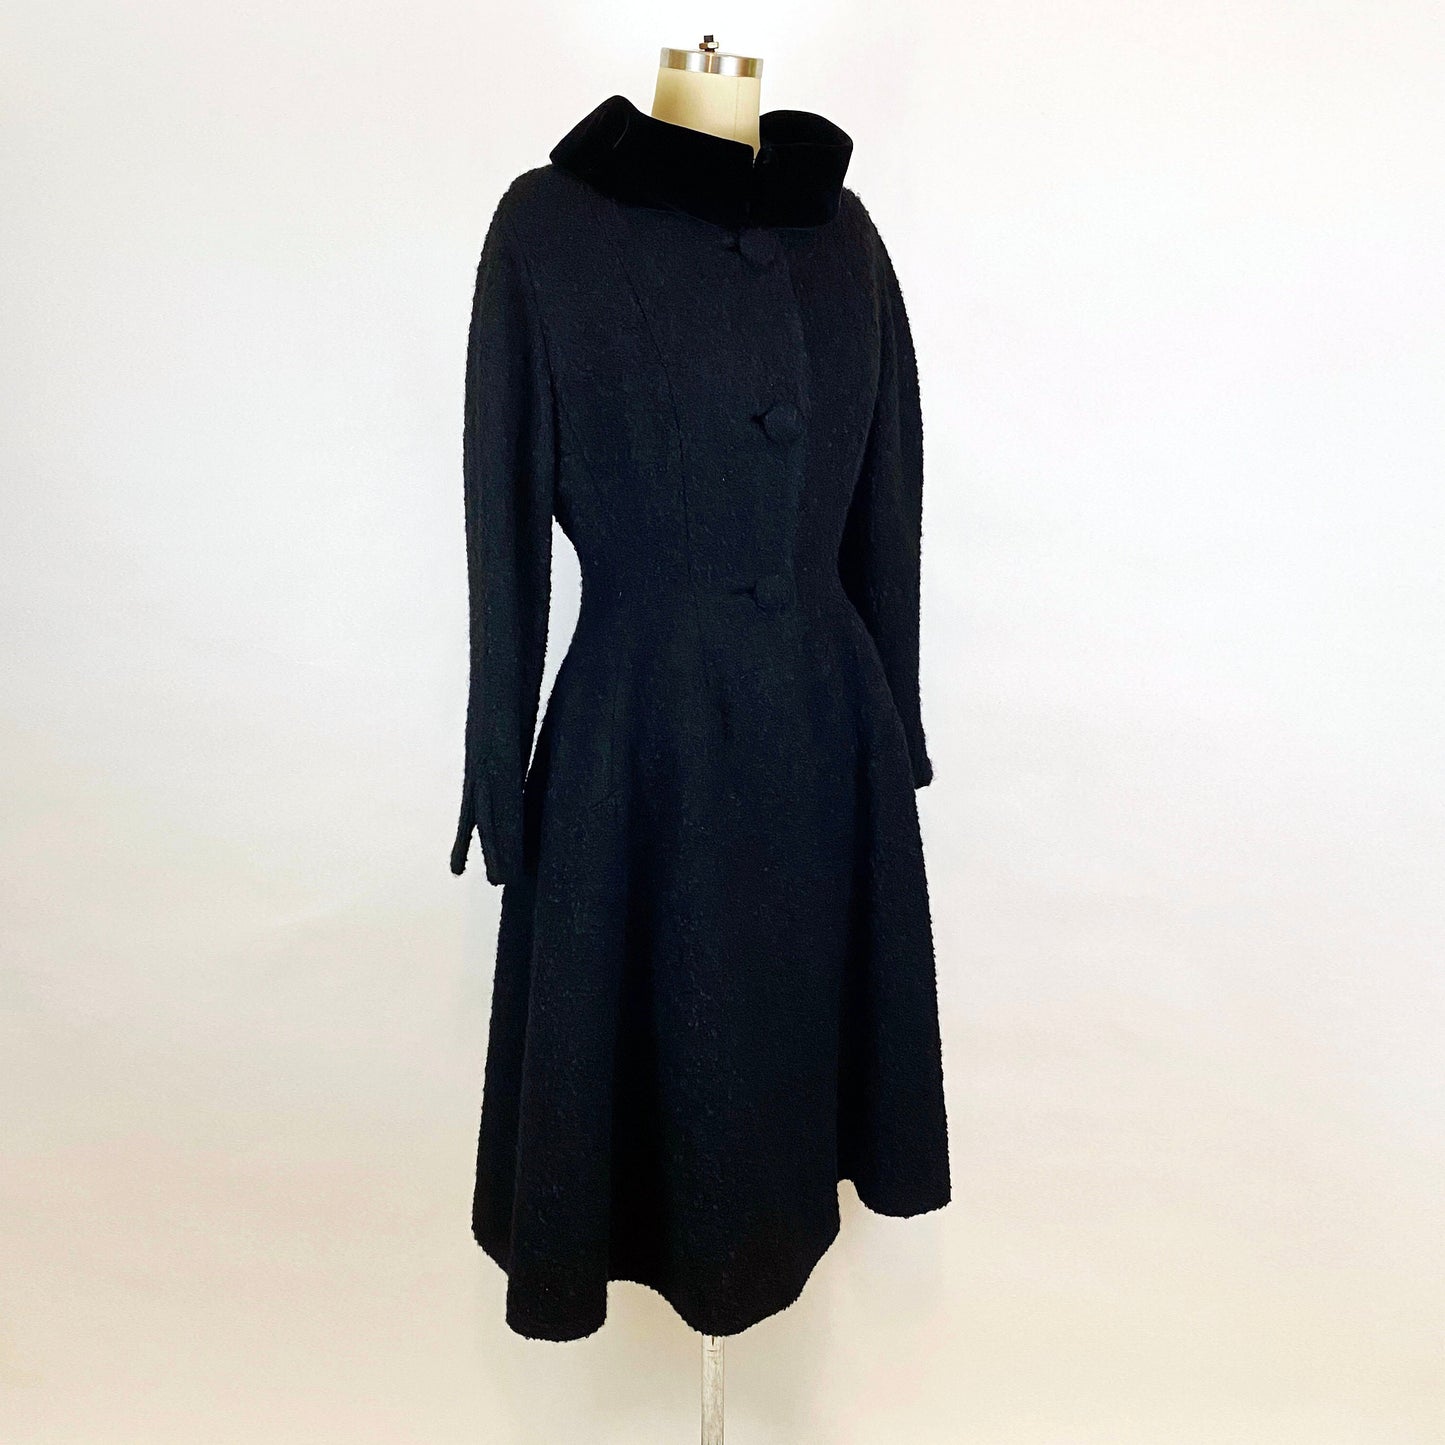 1950-1960's Lilli Ann Black Wool Boucle Princess Coat 60s Vintage Fit and Flare Jacket Hourglass Figure Vintage Retro / Size Medium 8/10